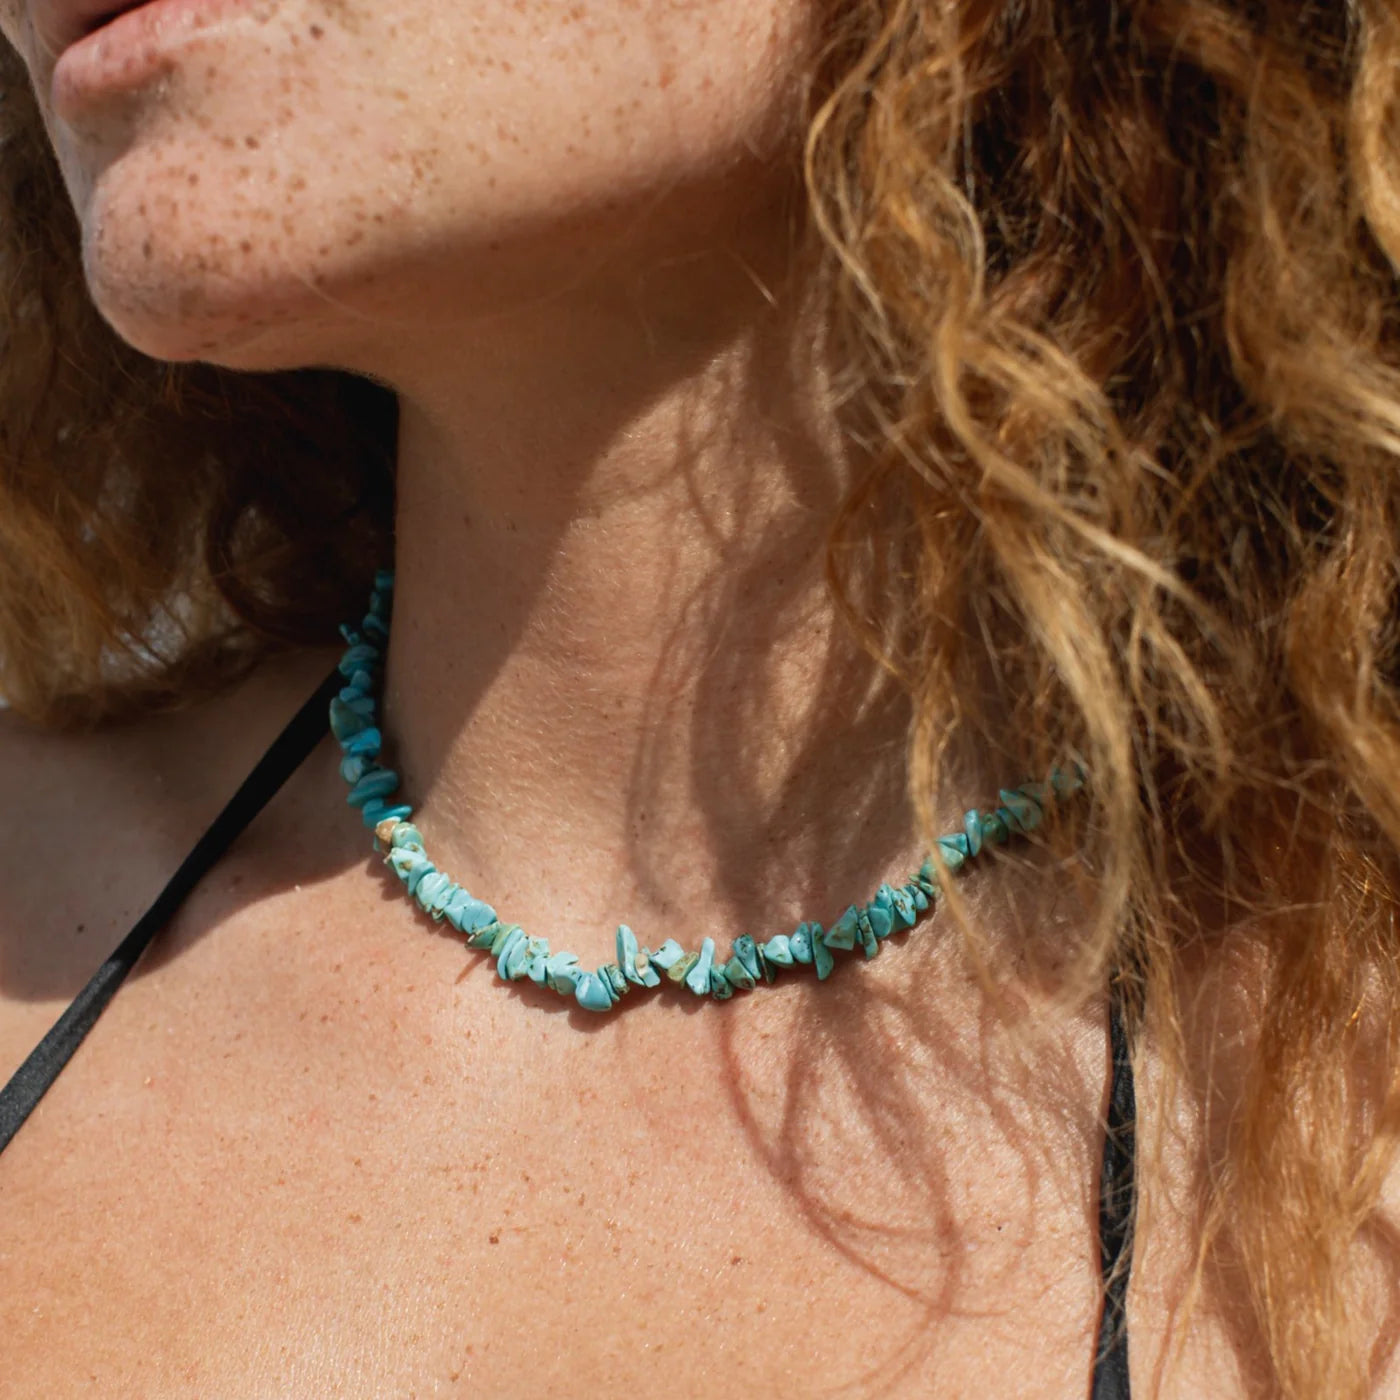 Pineapple Island Blue Lagoon Turquoise Gemstone Necklace